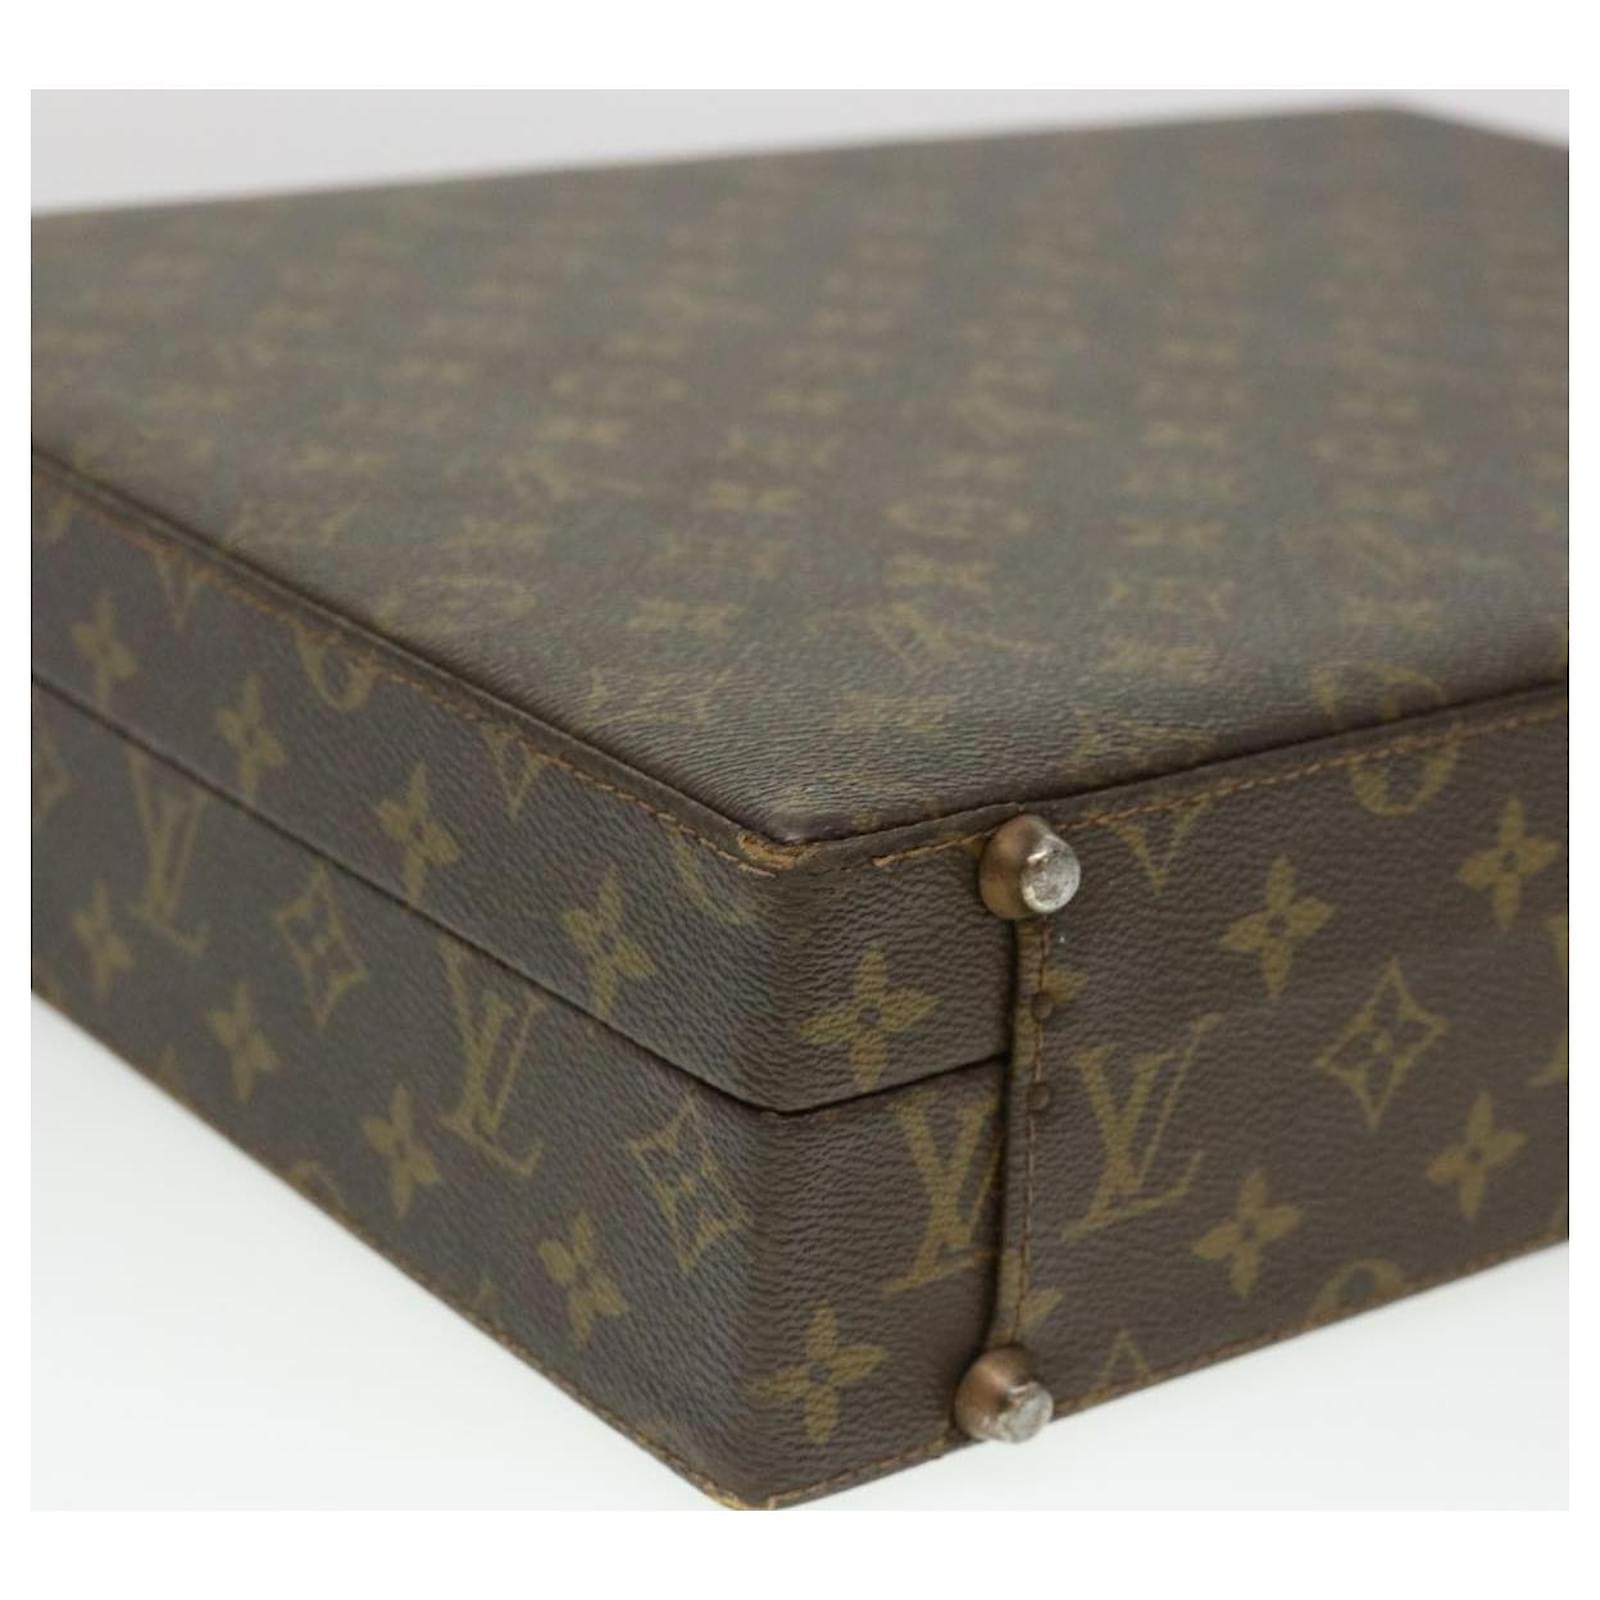 Louis Vuitton Crusher Attache Hard Case Trunk. On website search